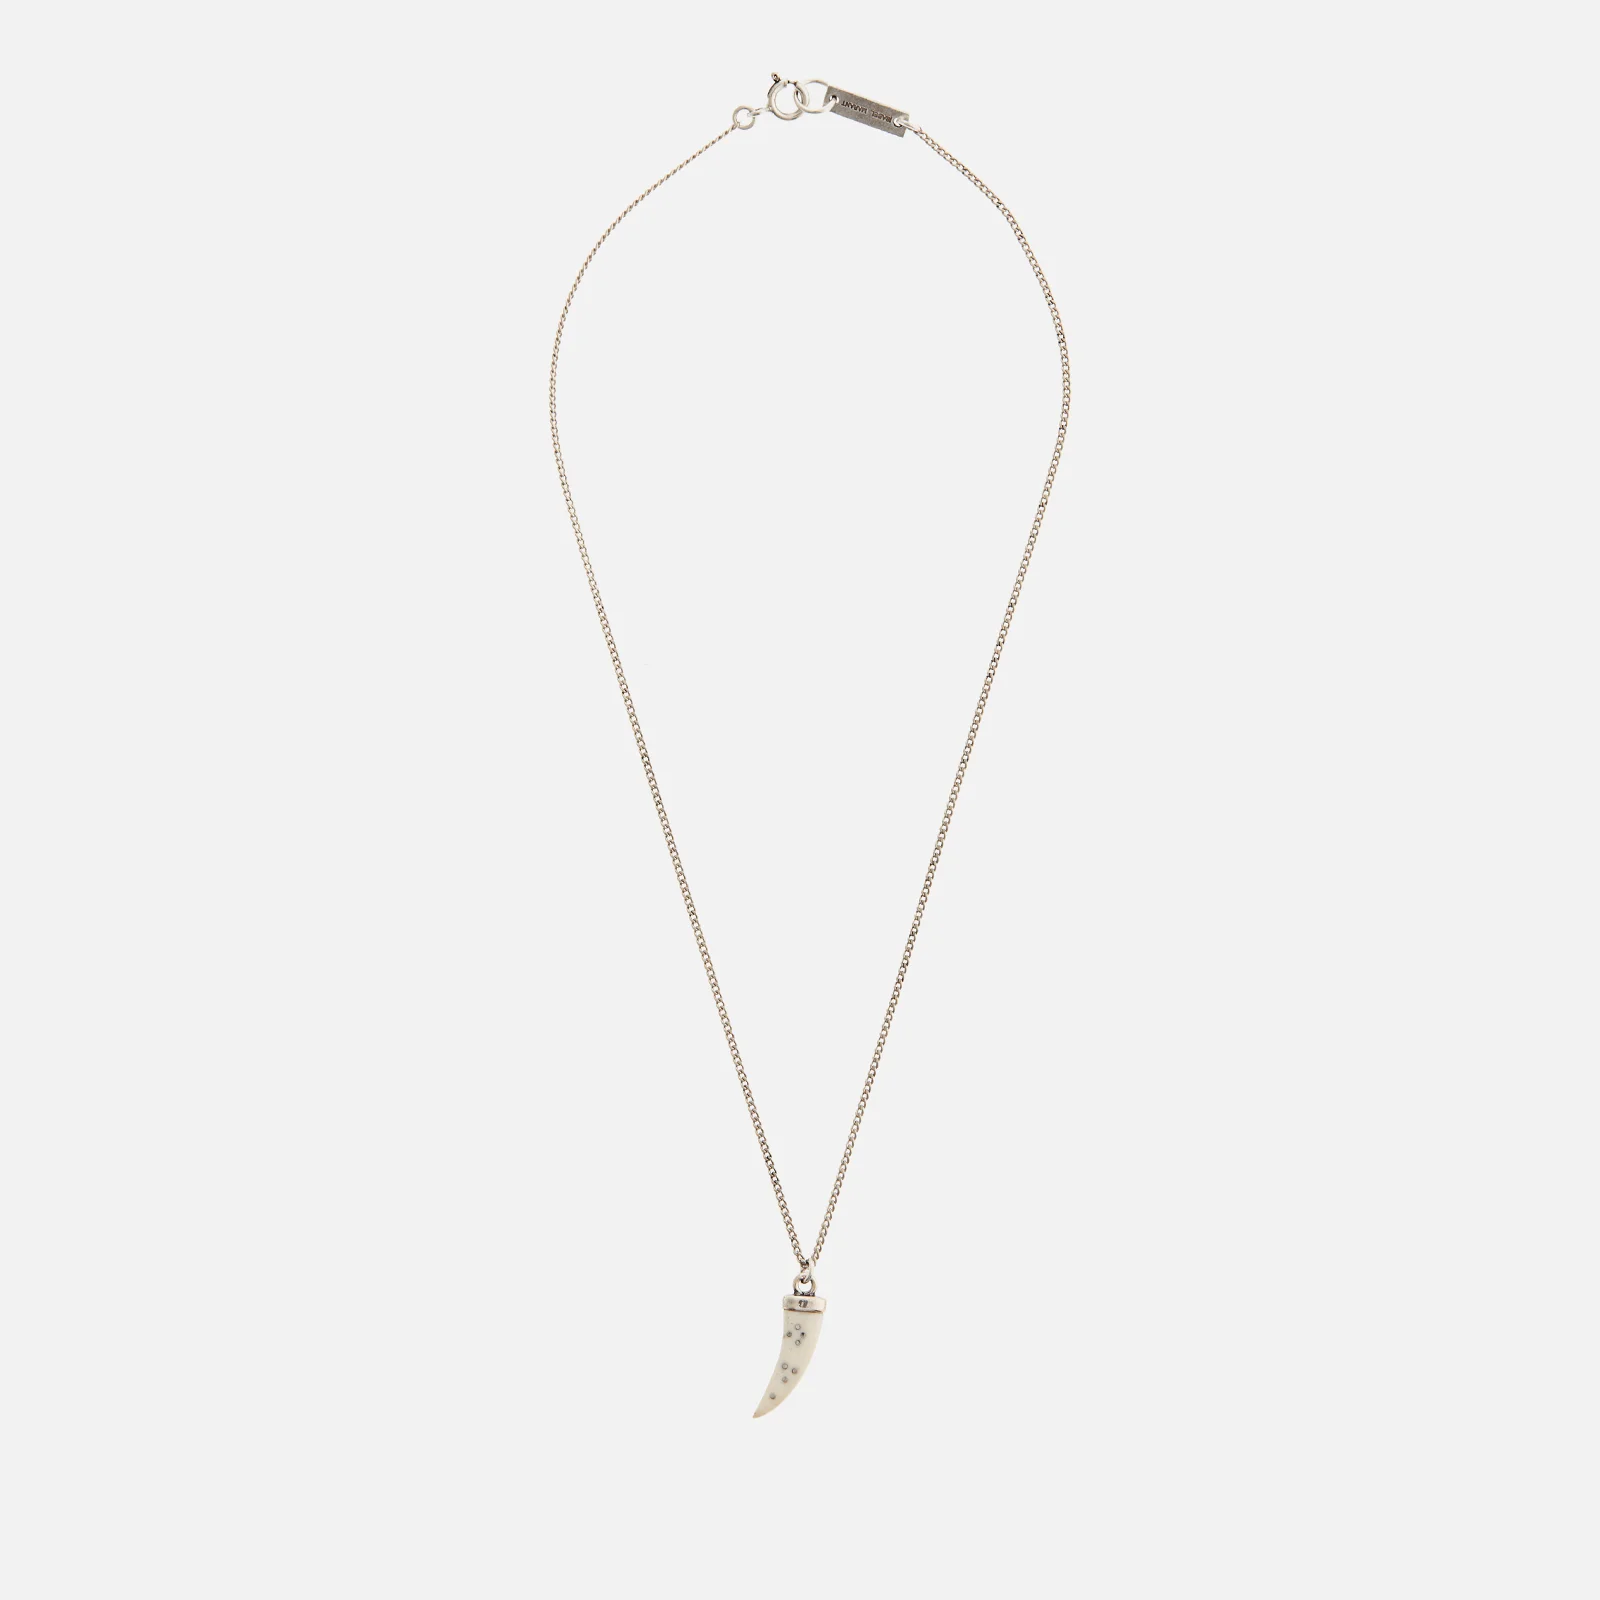 Isabel Marant Women's Horn Necklace - Ecru/Silver Image 1